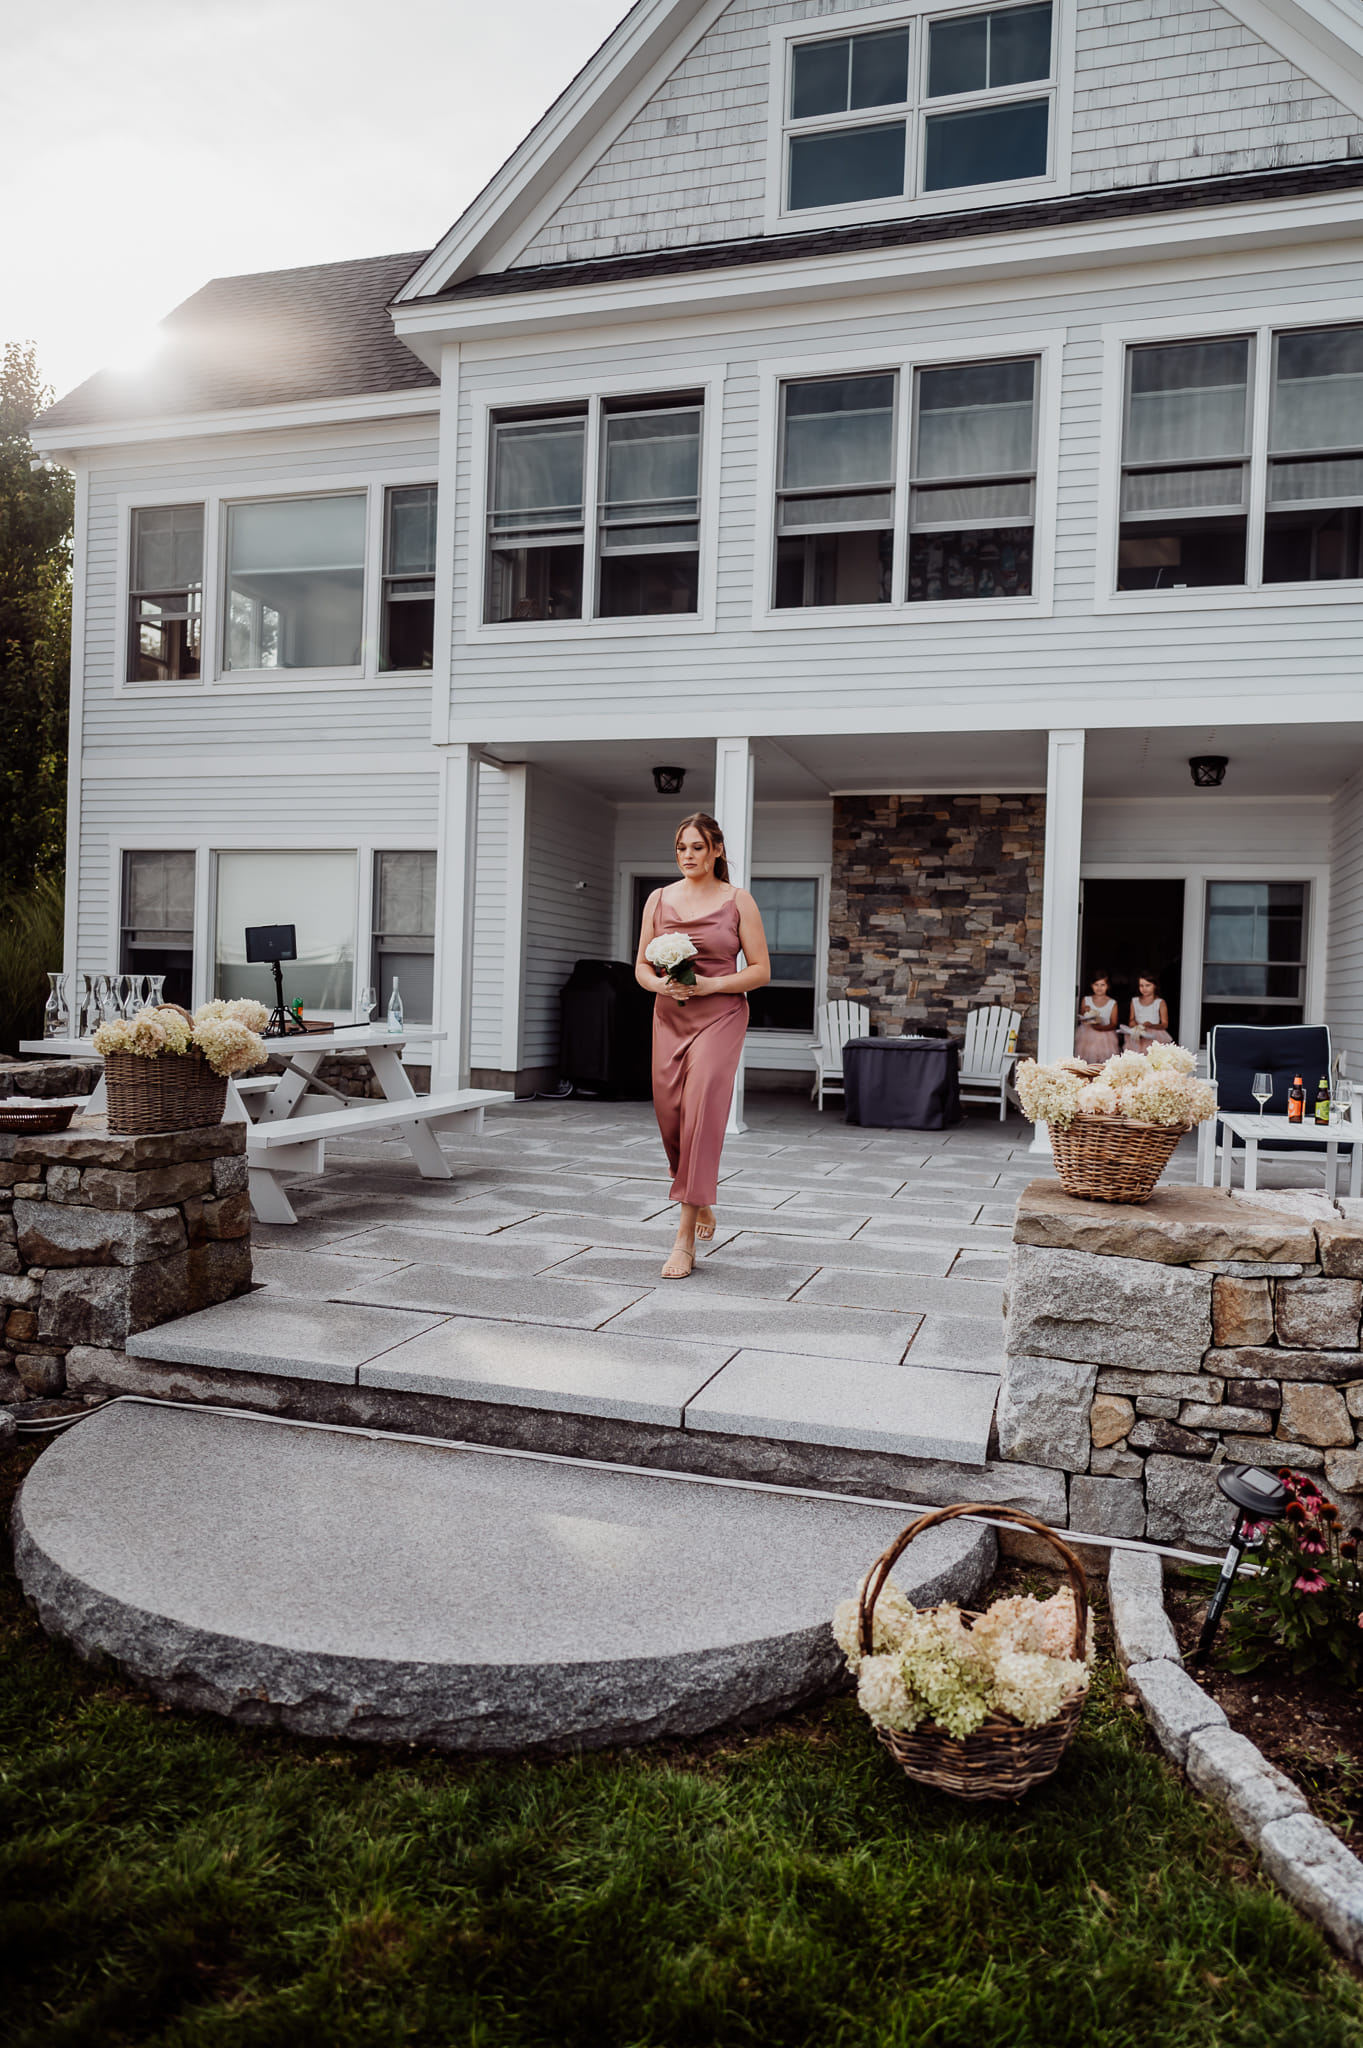 Boothbay Harbor Maine Wedding Photography